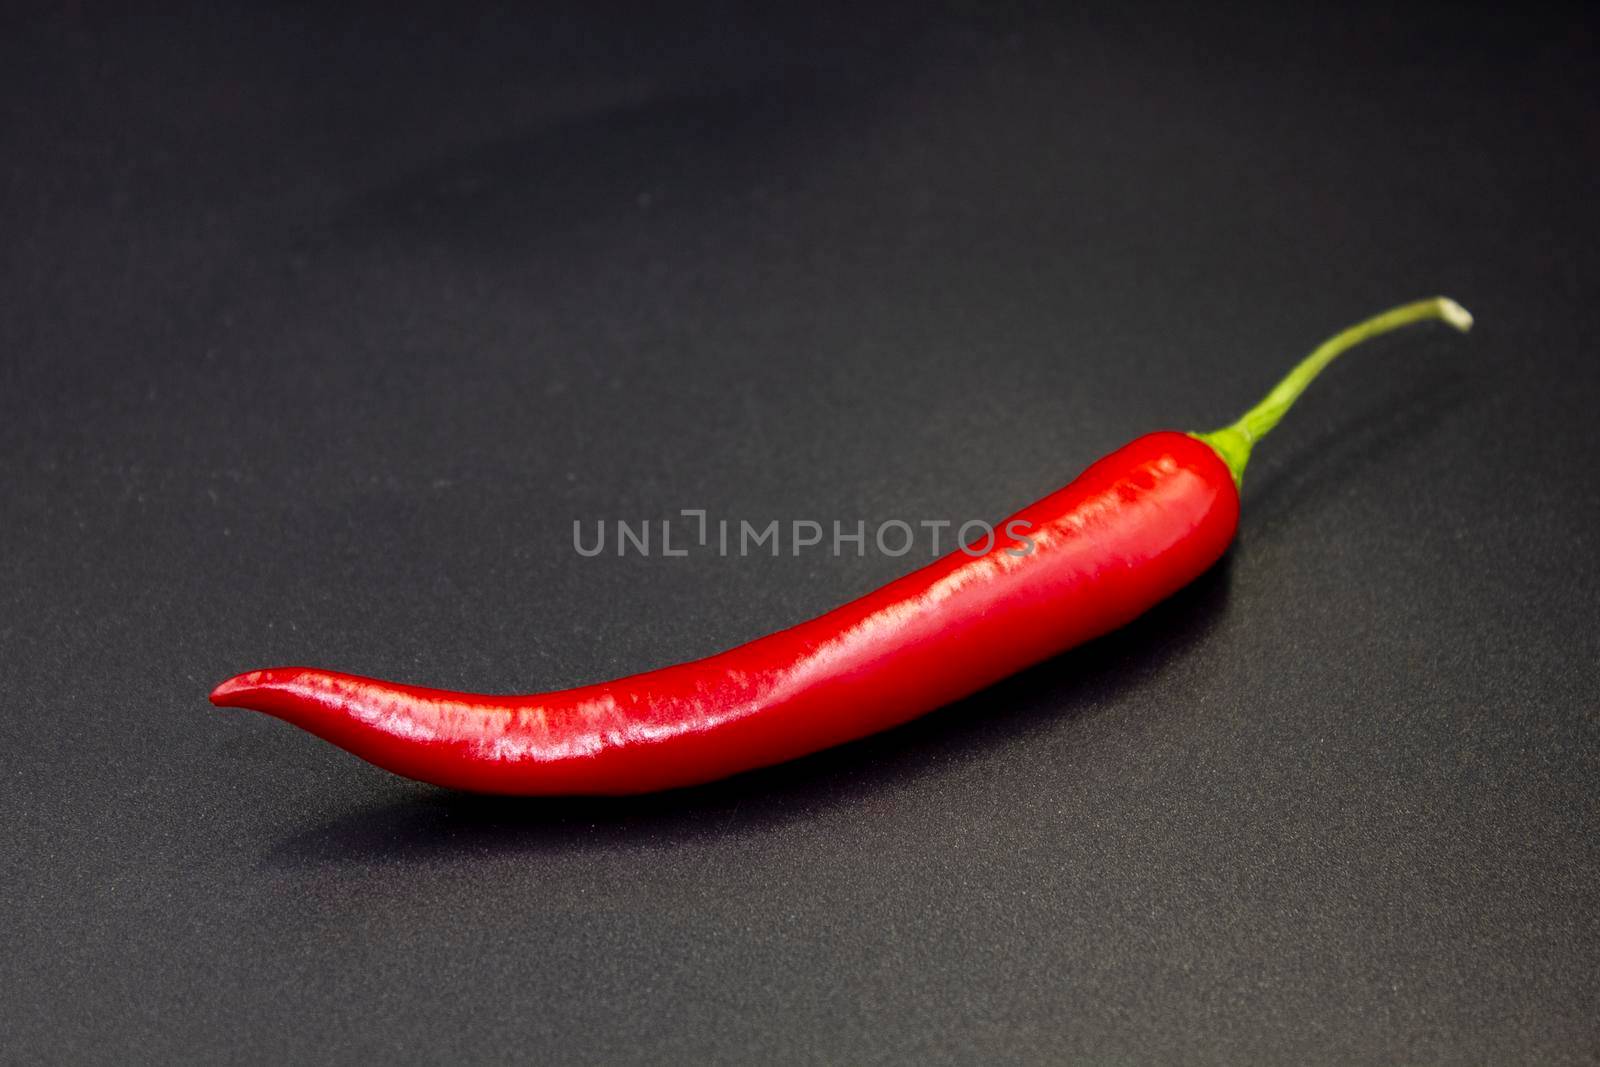 Red hot natural chili pepper. Fresh organic  chili pepper on black